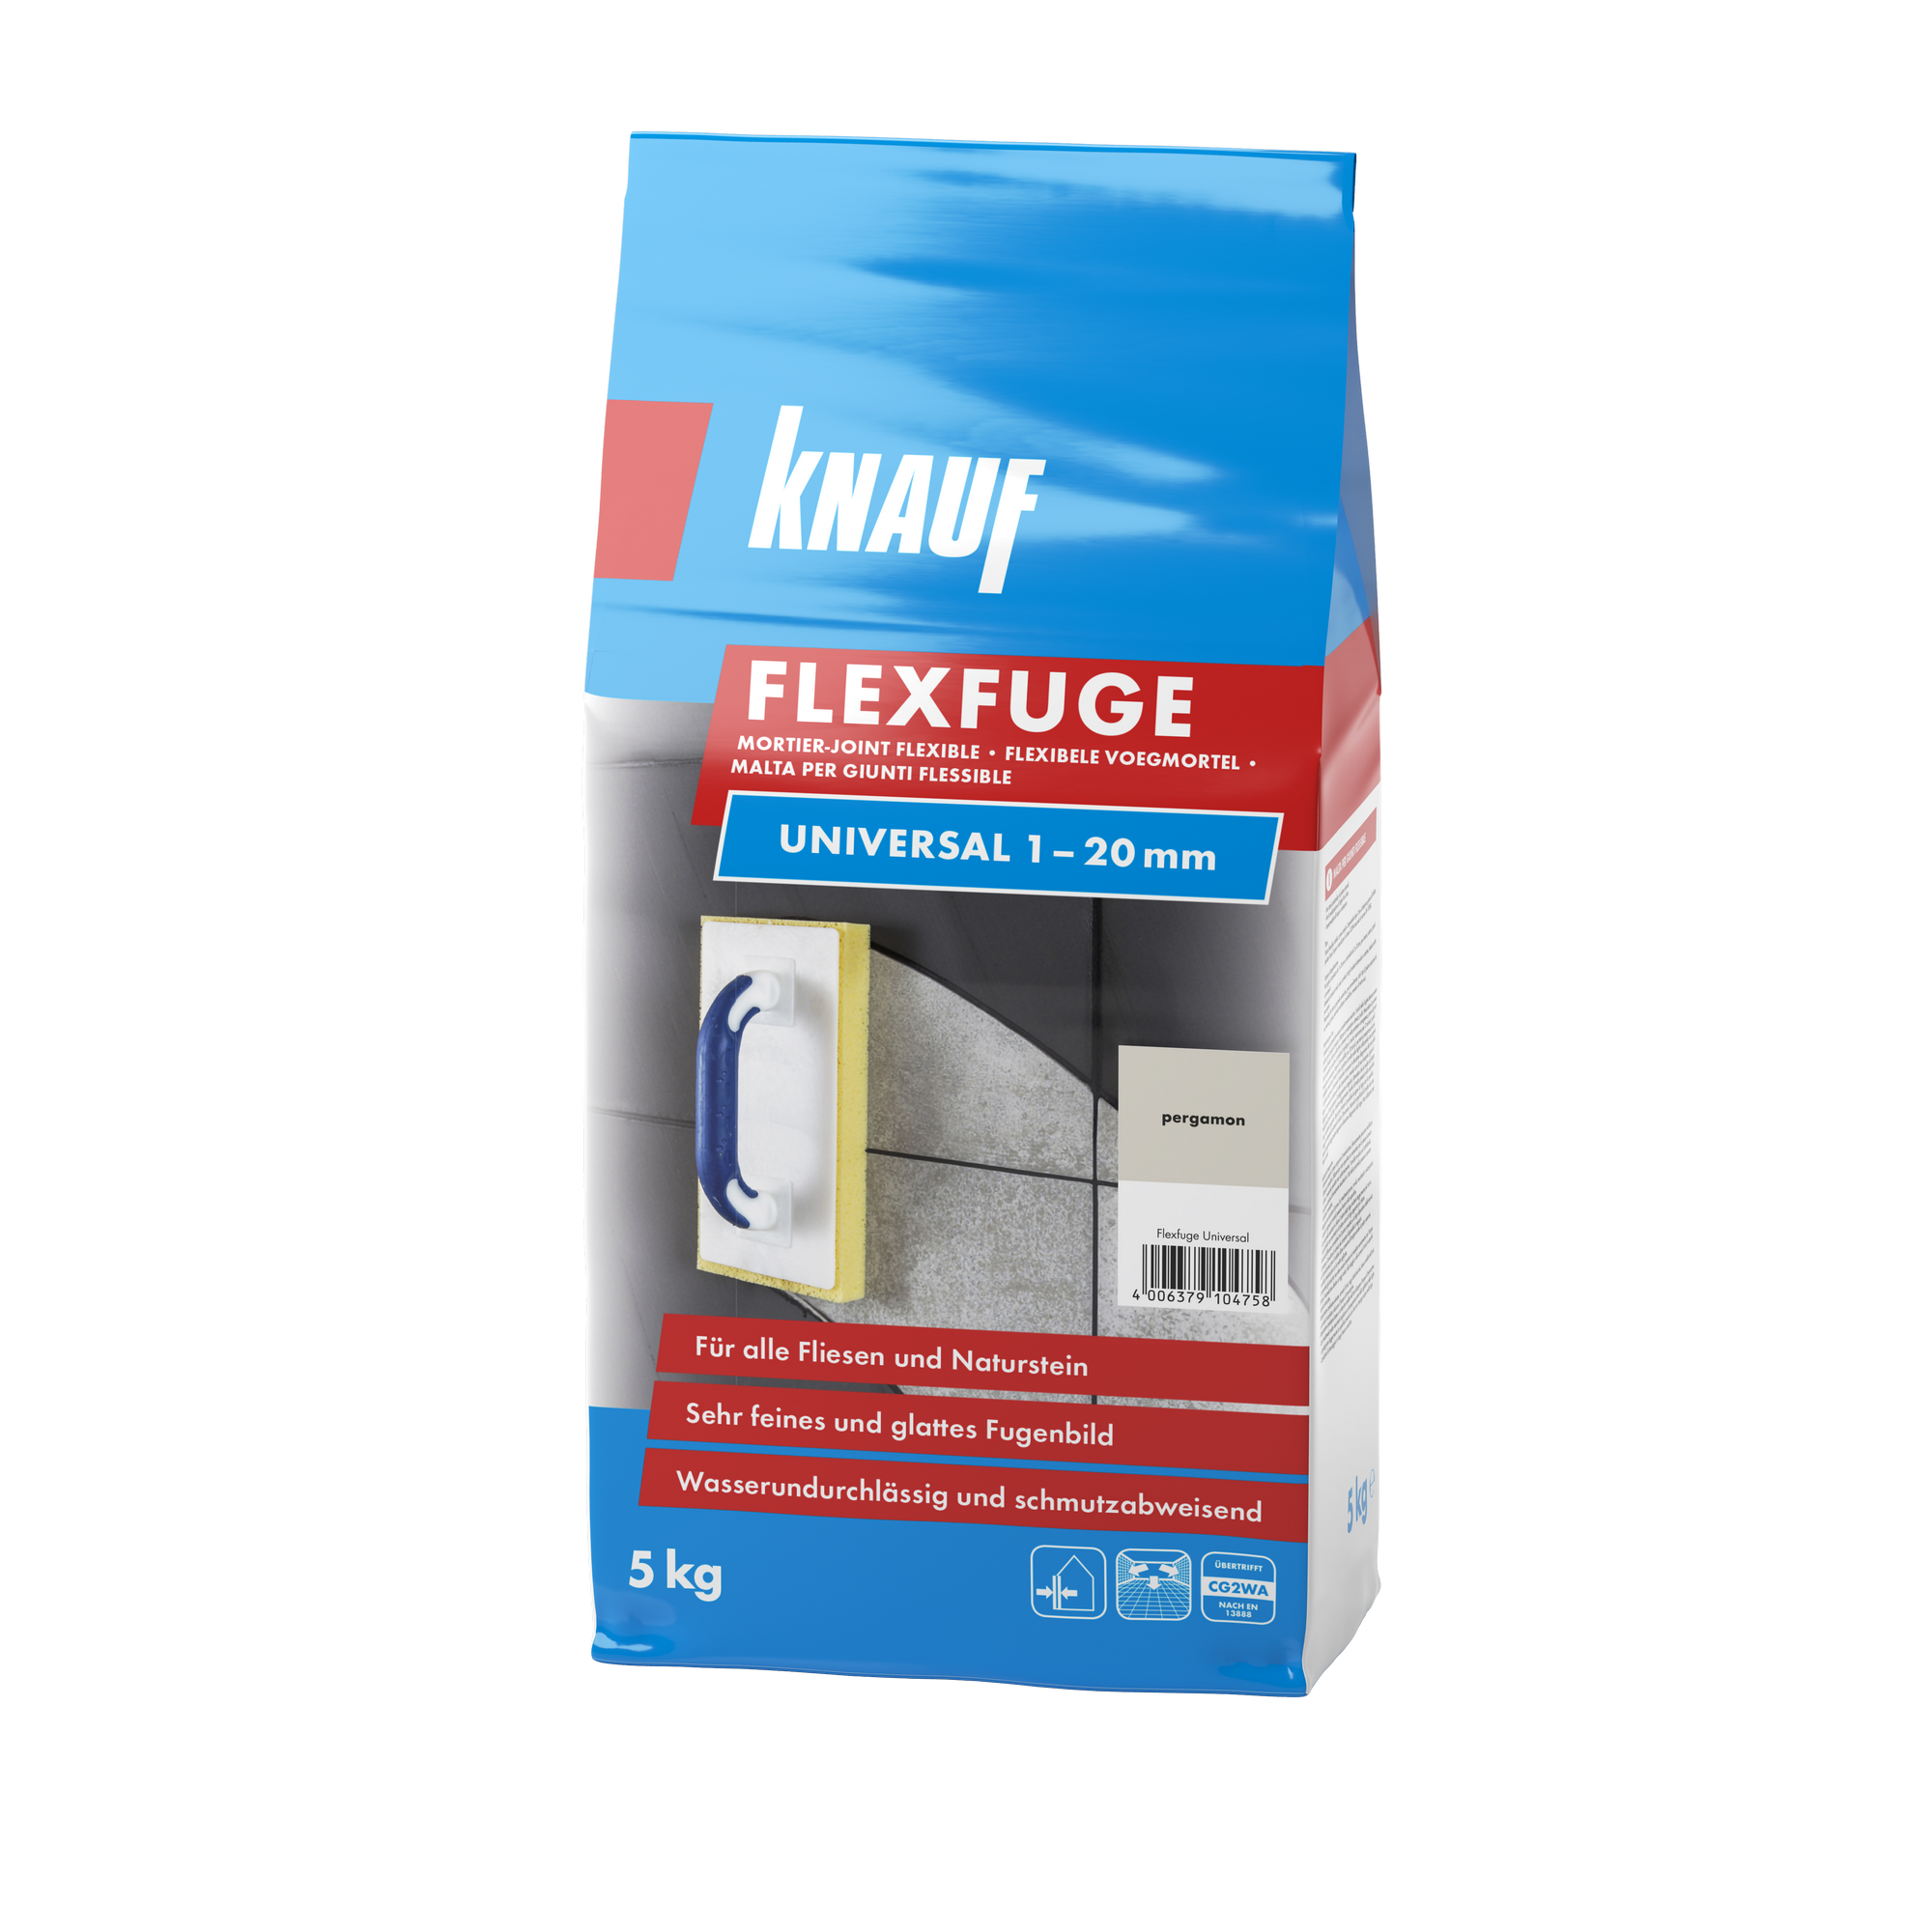 Flexfuge 'Universal' pergamon 5 kg + product picture